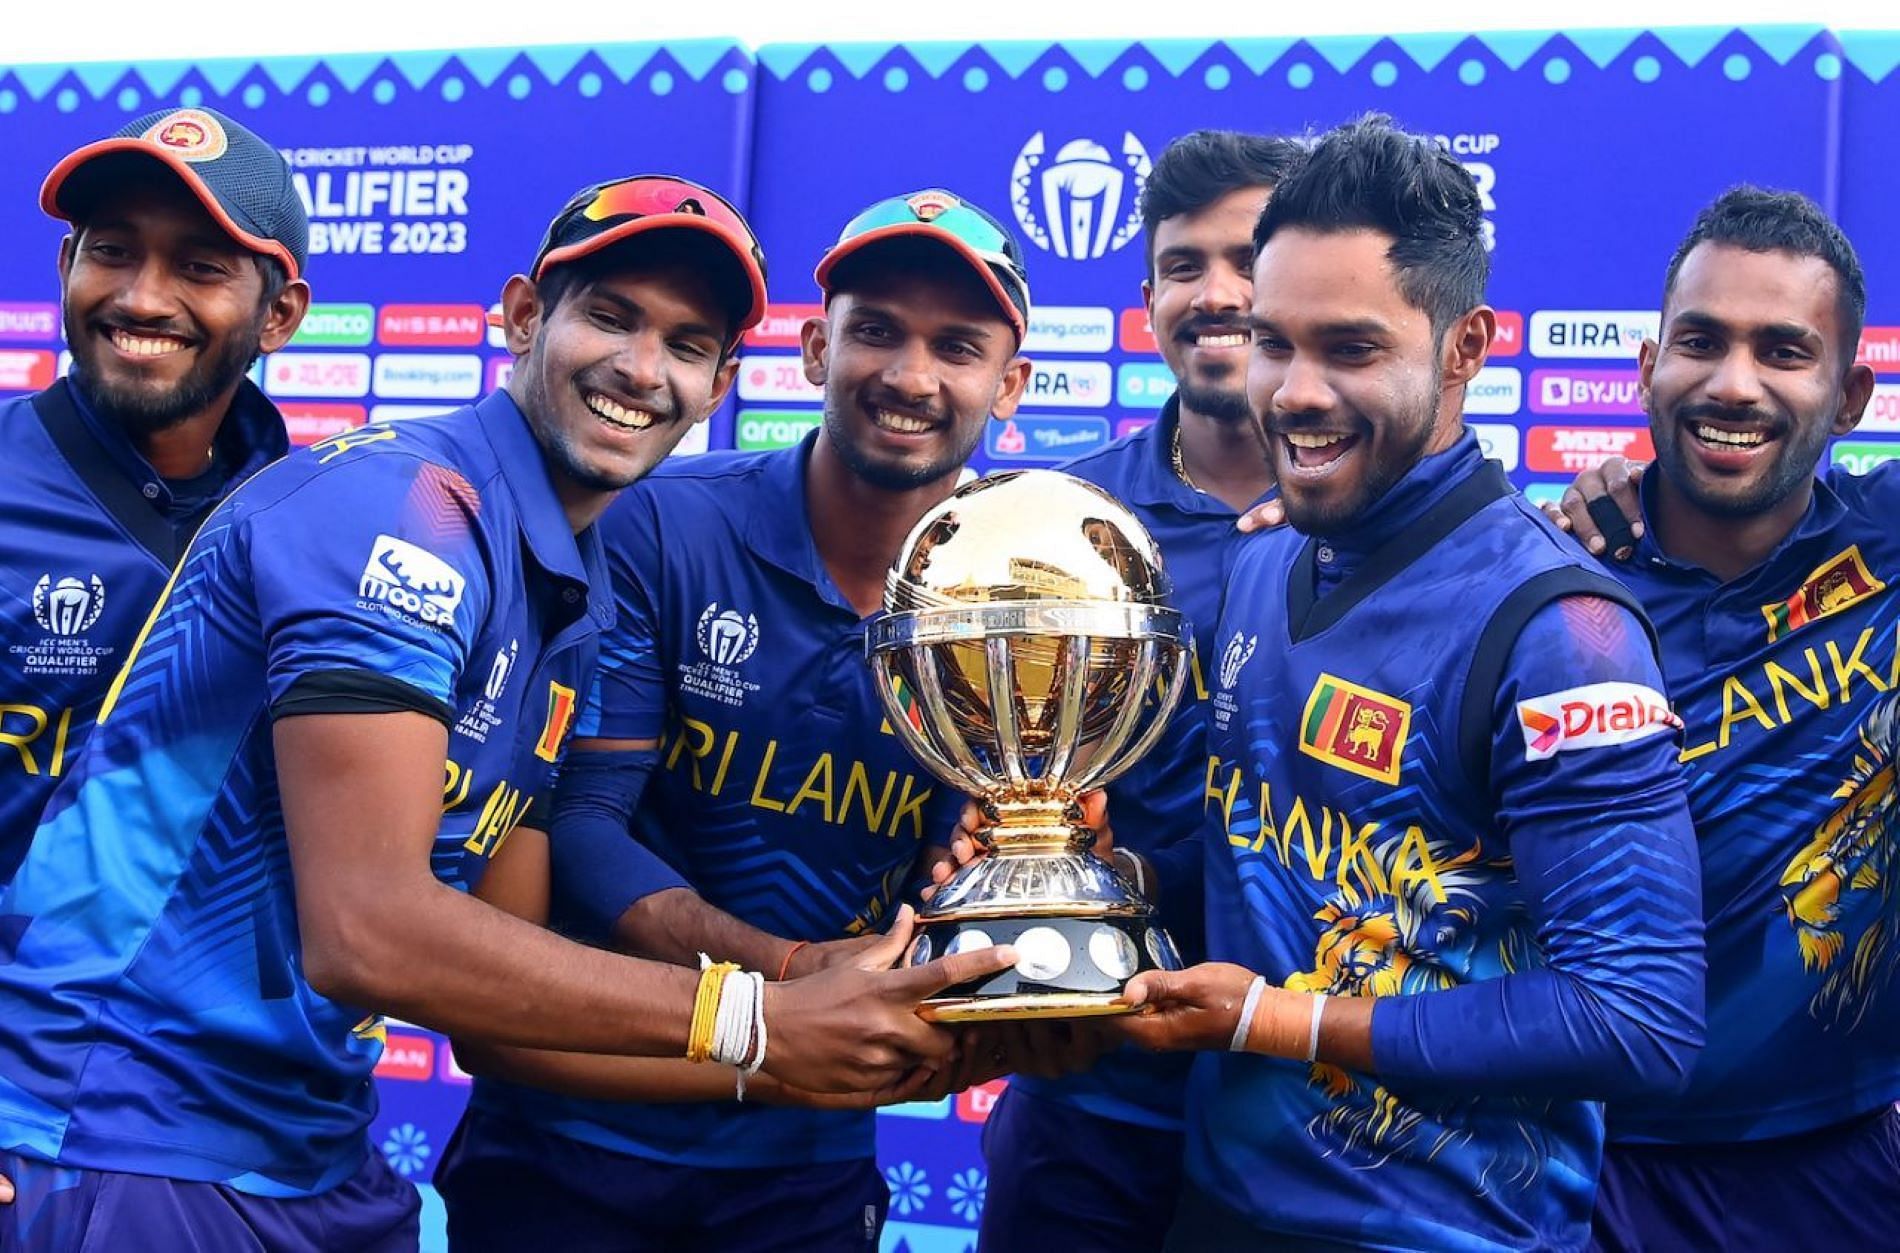 Sri Lanka were unbeaten through their title run in the ICC World Cup Qualifiers.